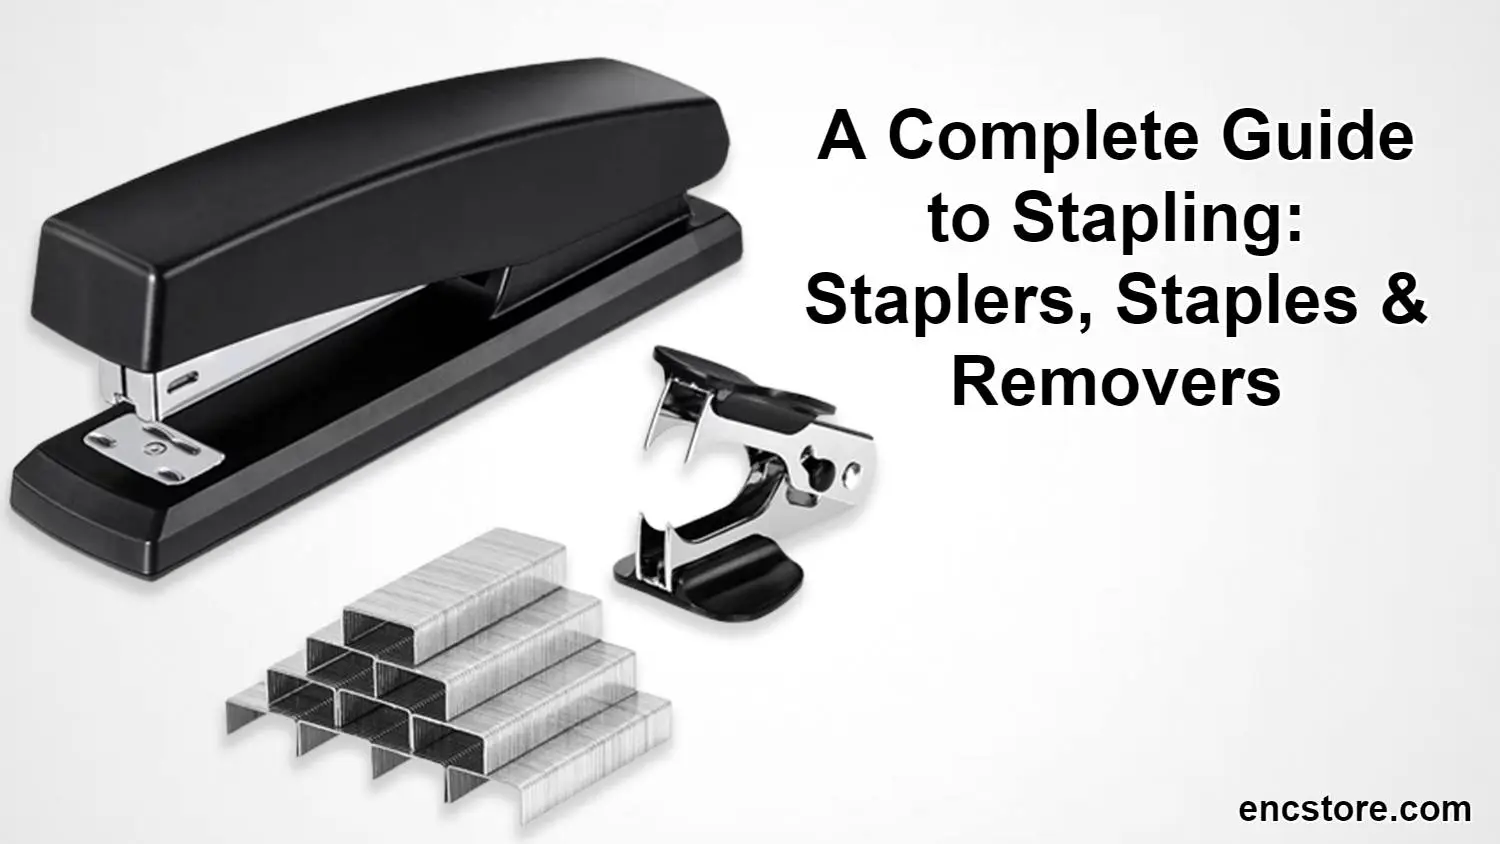 Staplers, Staples & Removers